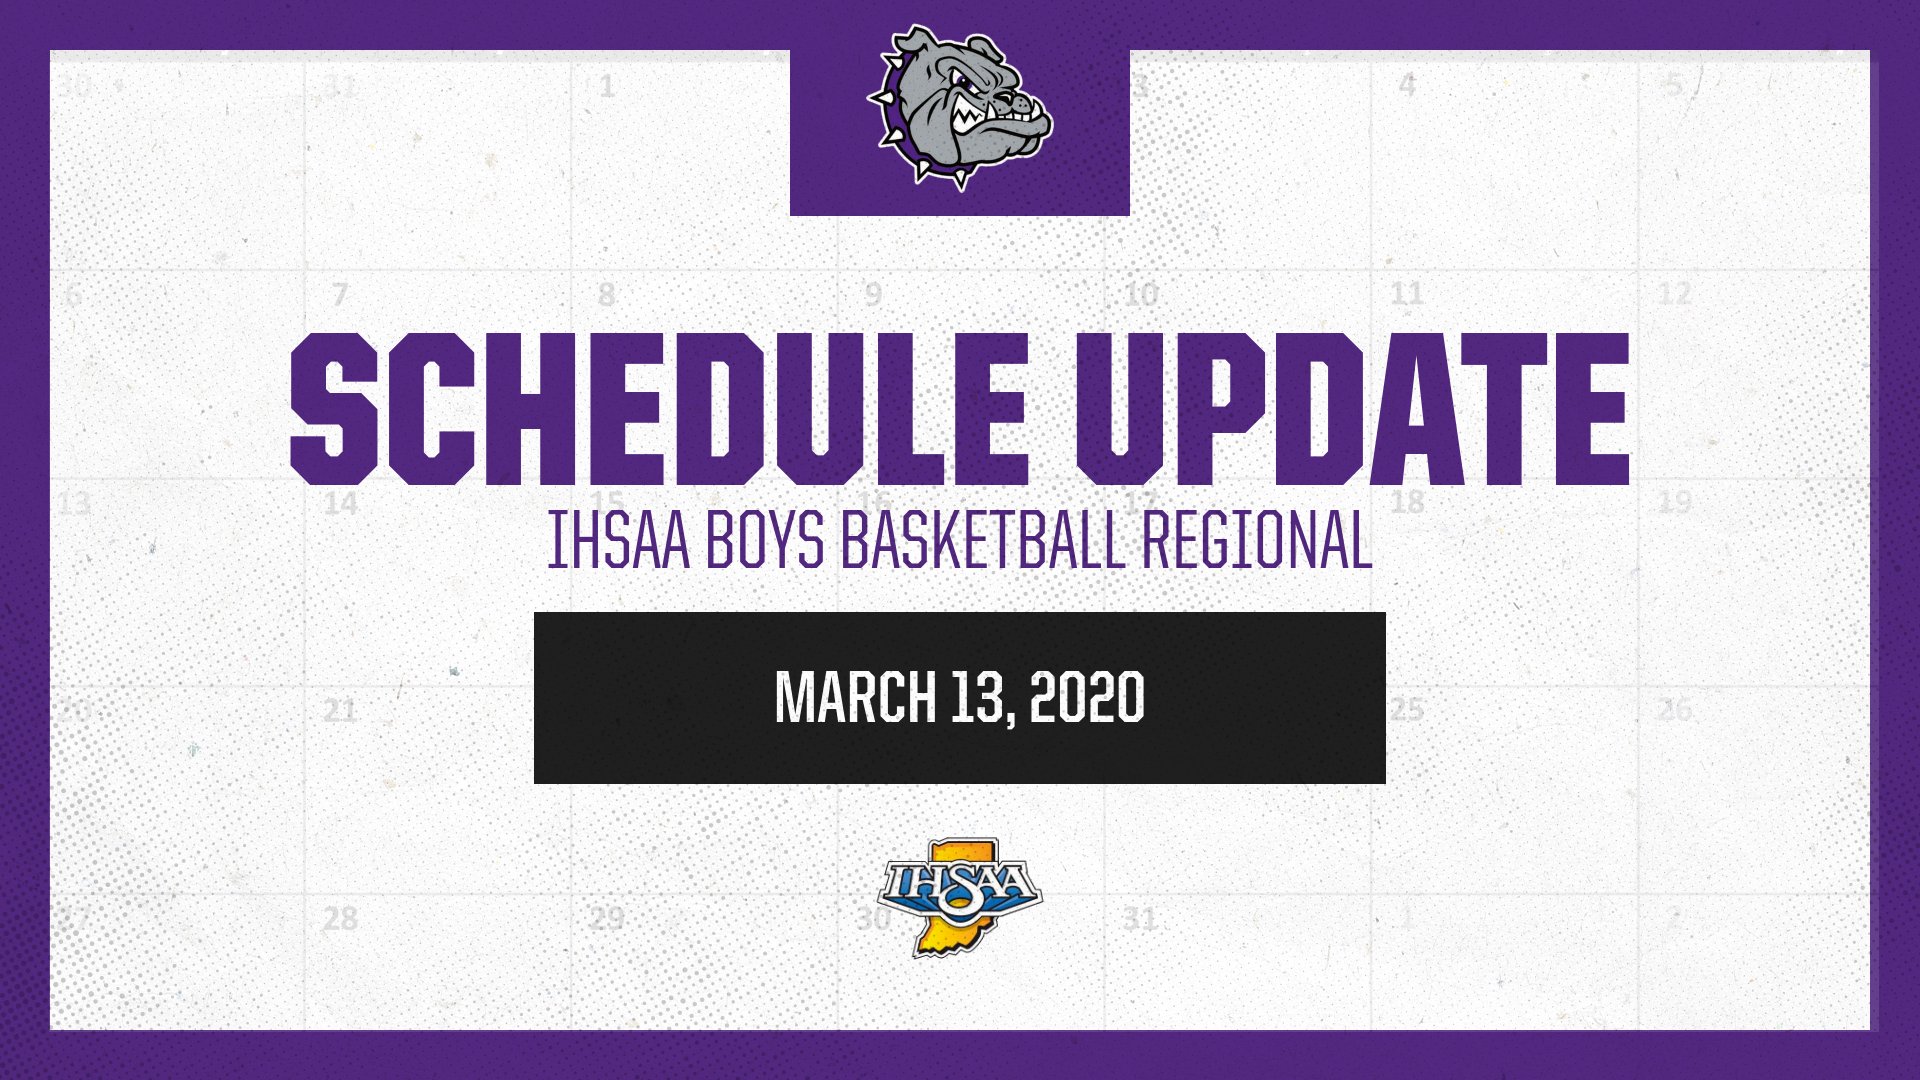 IHSAA Boys Basketball Regional Postponed